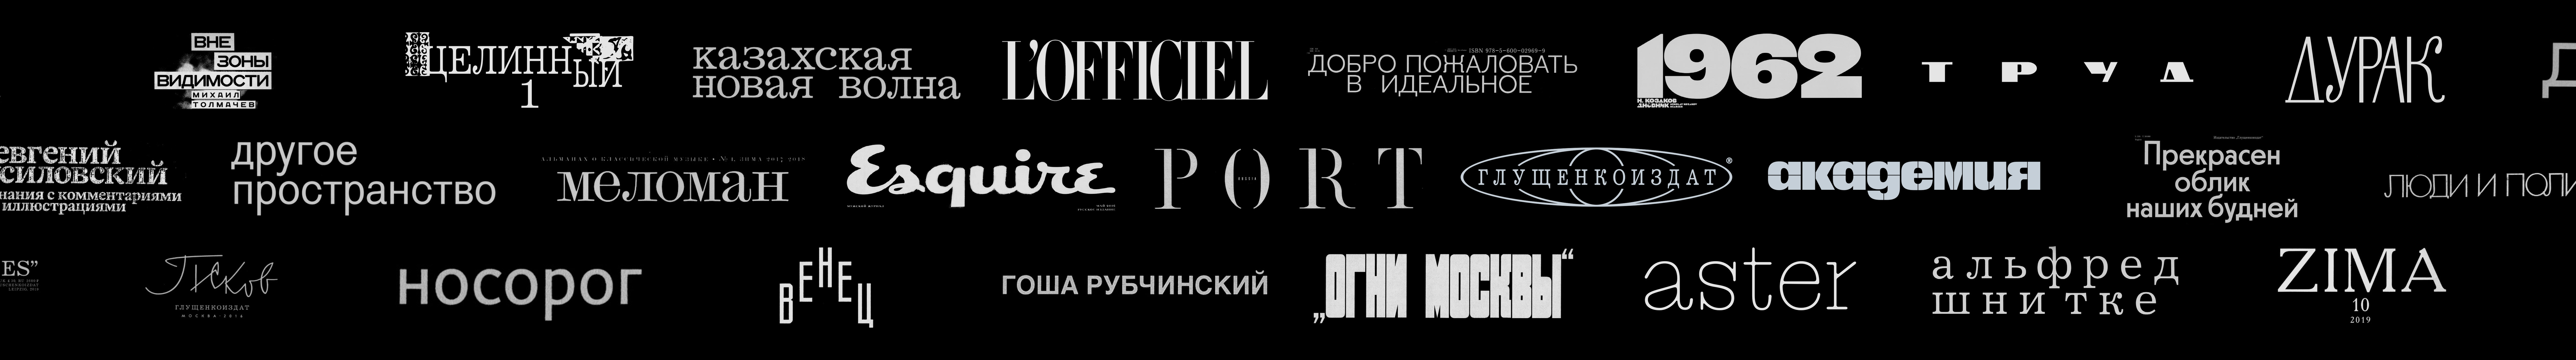 Bannière de profil de Kirill Gluschenko